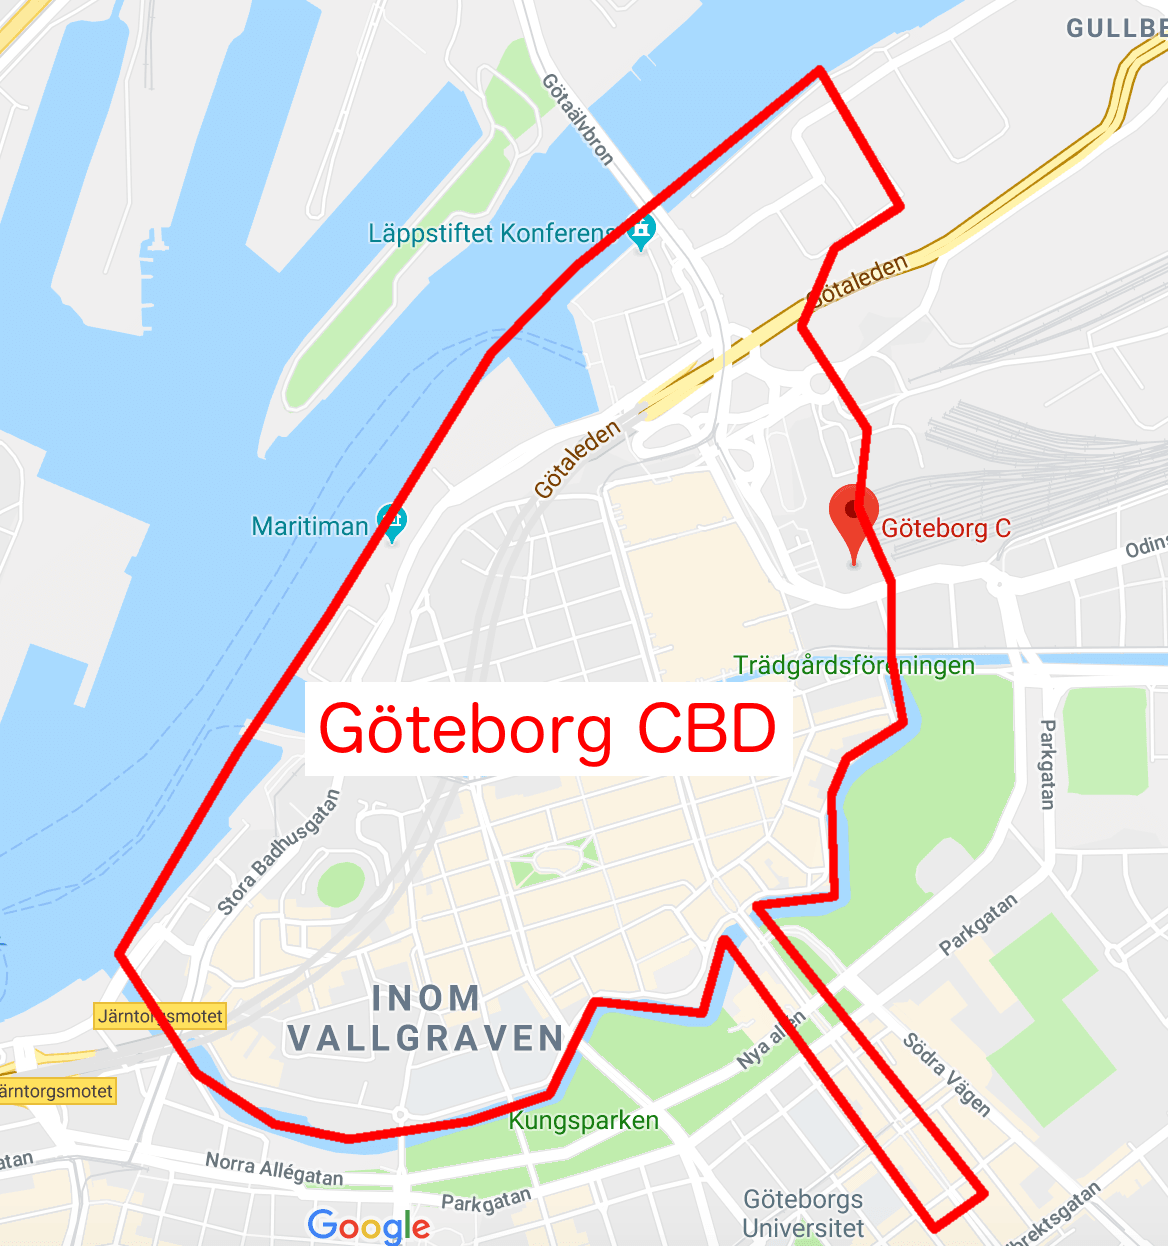 Göteborg CBD central business district